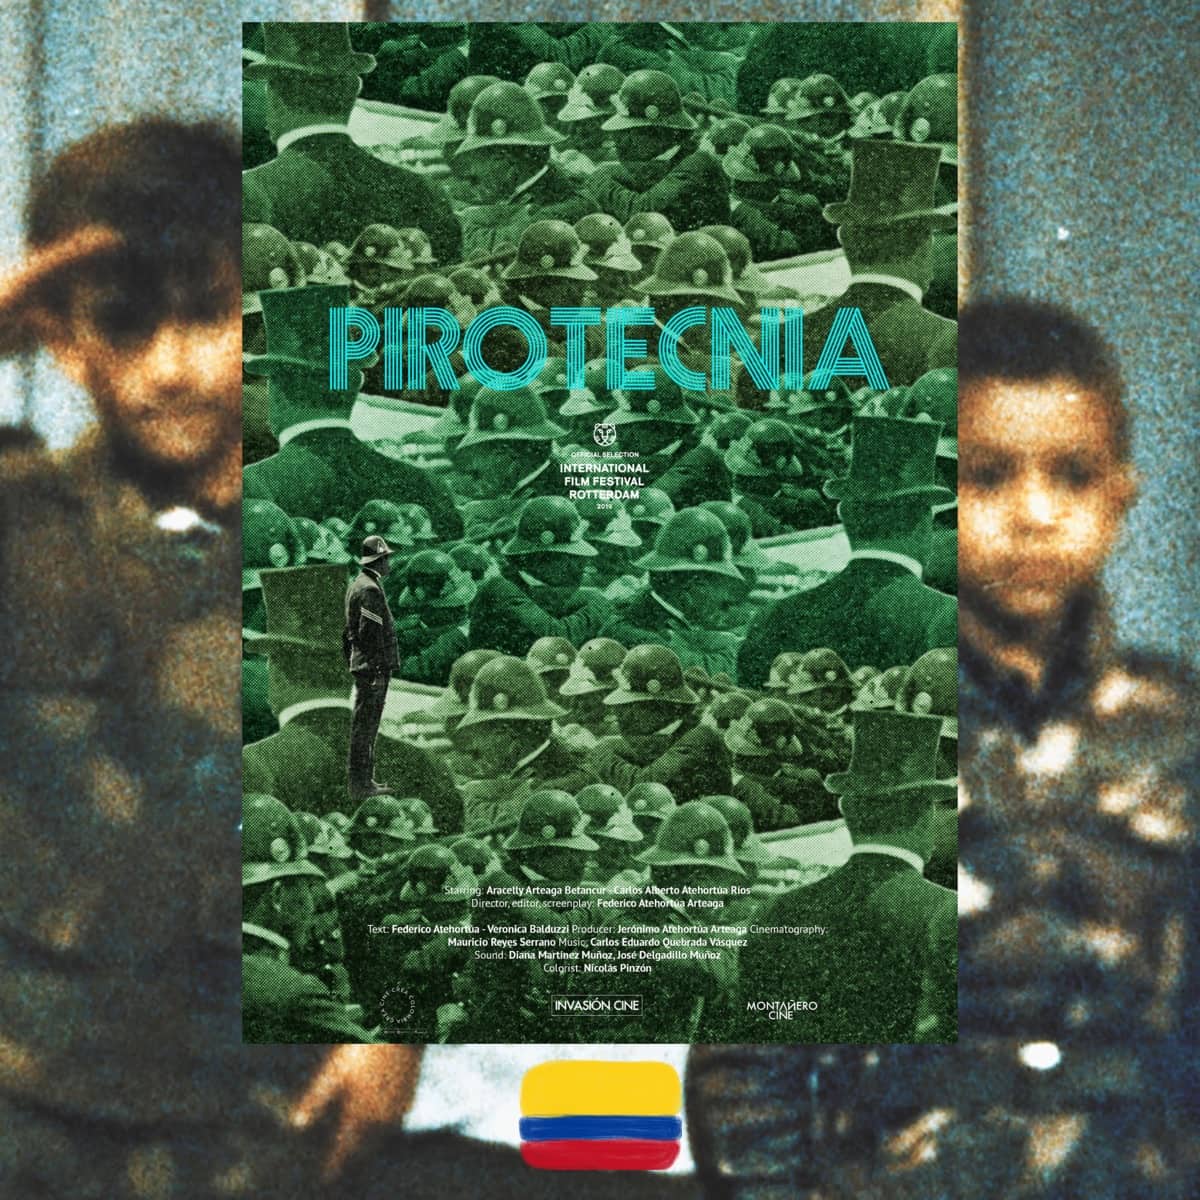 Mute Fire, Federico Atehortúa Arteaga, movie poster